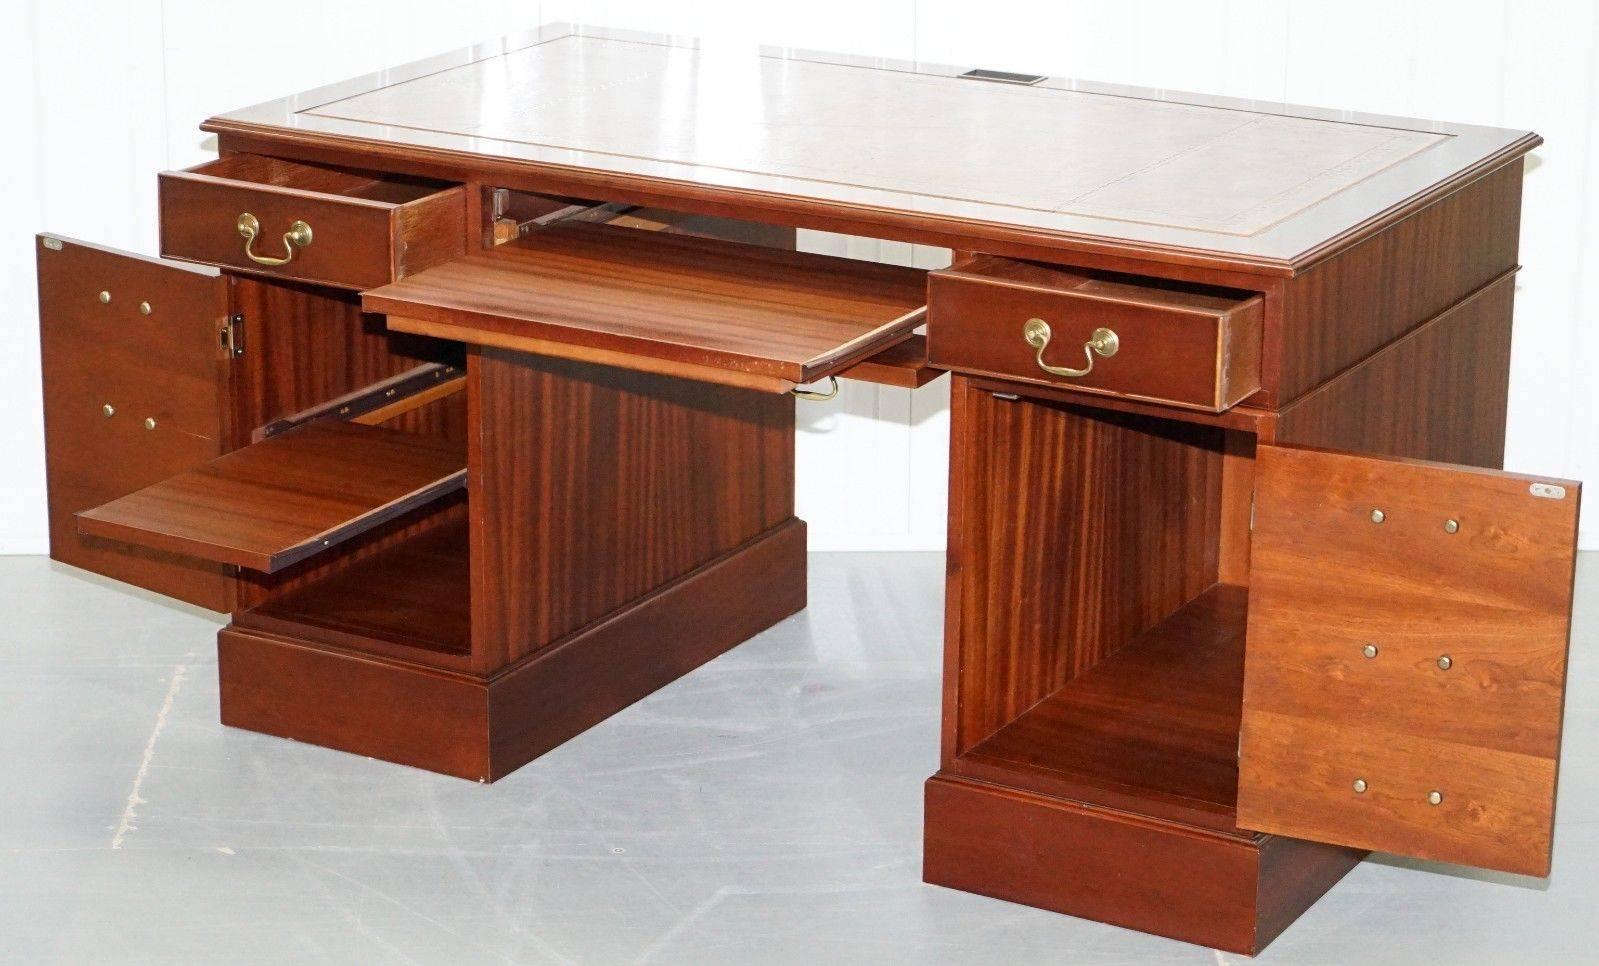 20th Century Hardwood Twin Pedestal Partner Desk Leather Top Designed to House Computer